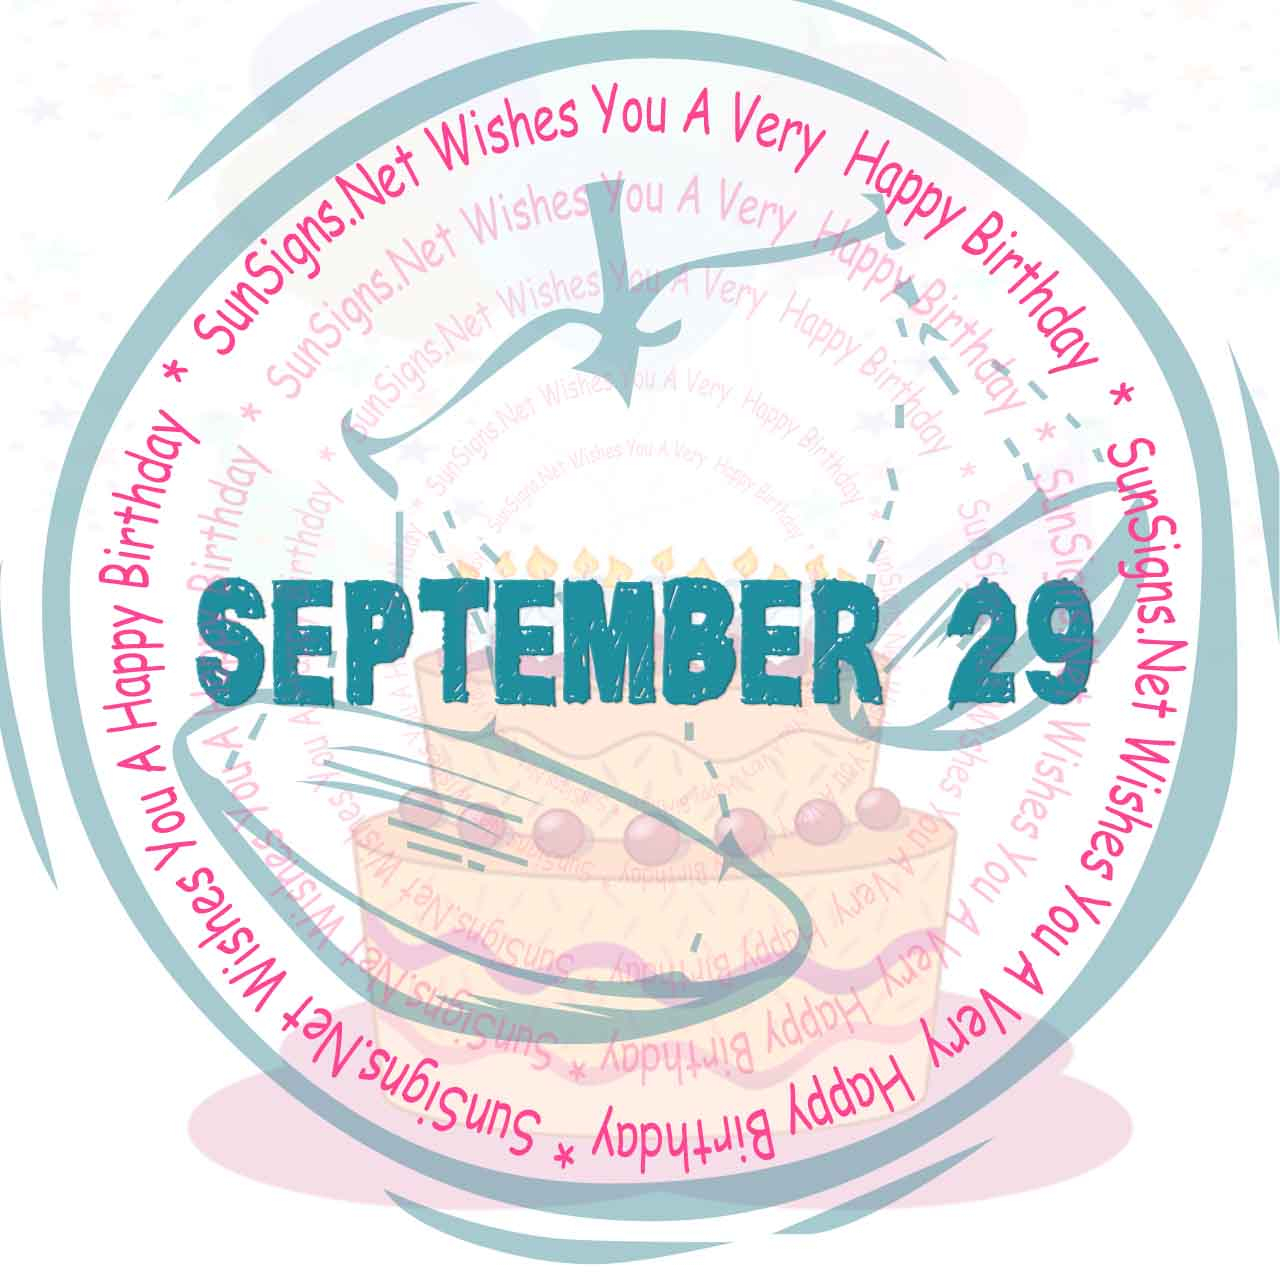 September 29 Zodiac Is Libra, Birthdays And Horoscope